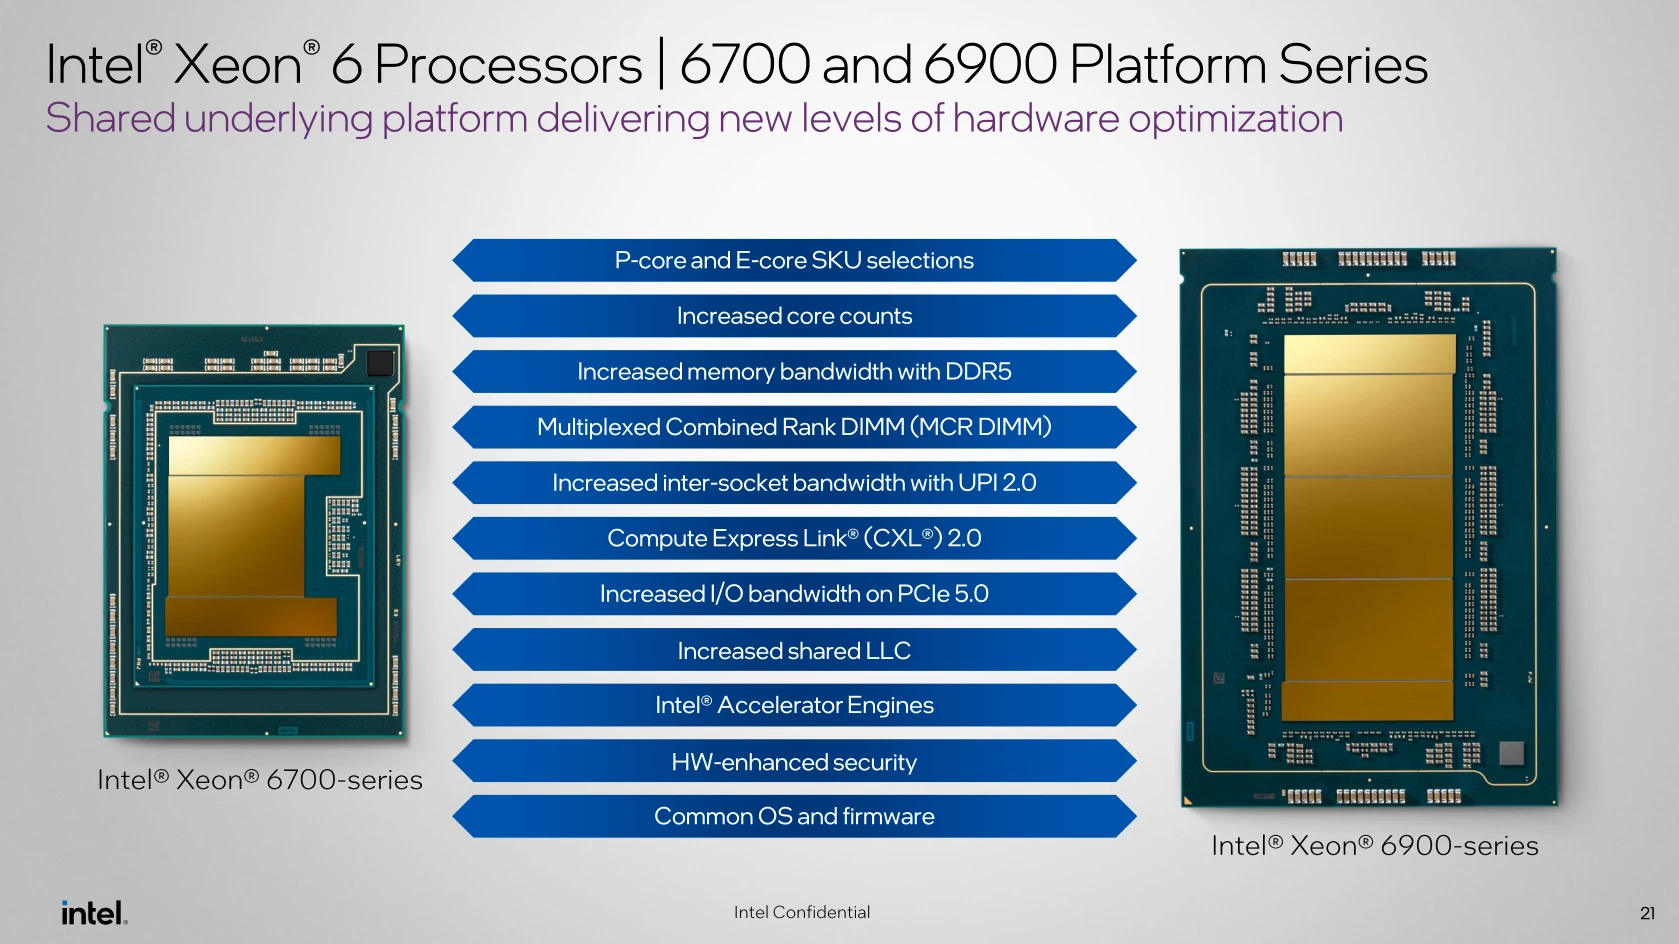 Intel Xeon6 Platforms